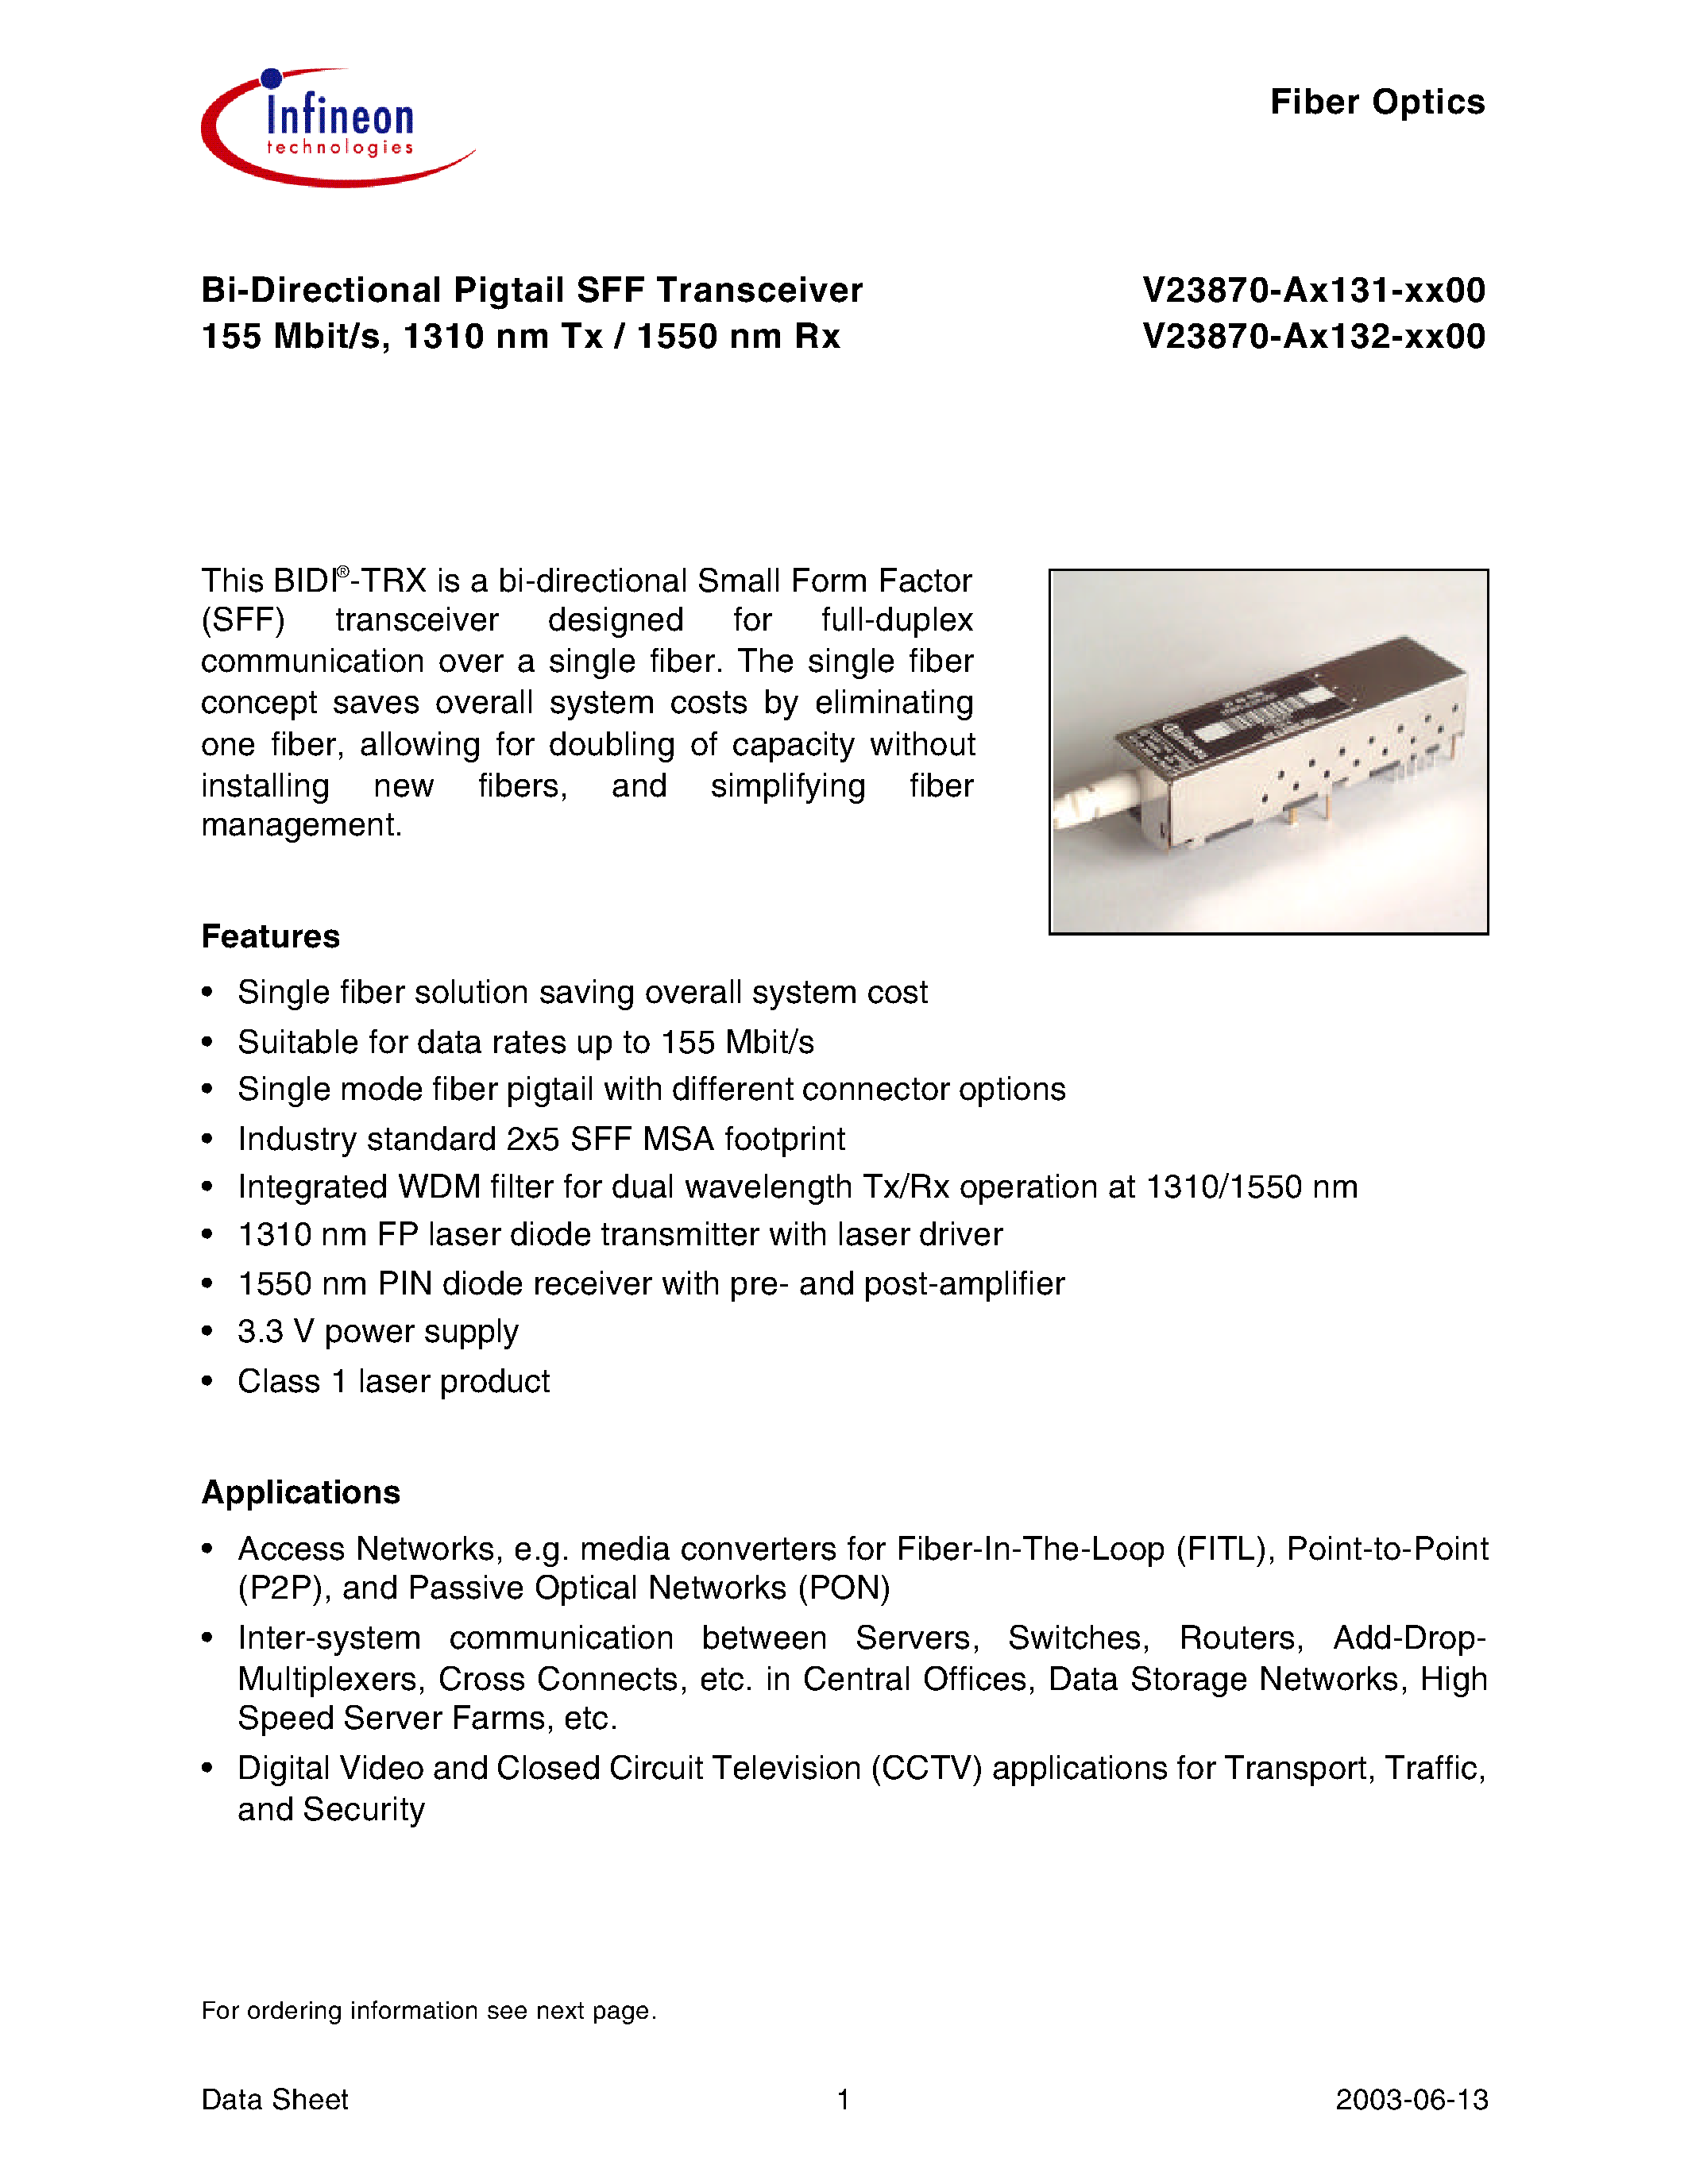 Даташит V23870-A3131-A200 - Bi-Directional Pigtail SFF Transceiver 155 Mbit/s/ 1310 nm Tx / 1550 nm Rx страница 1